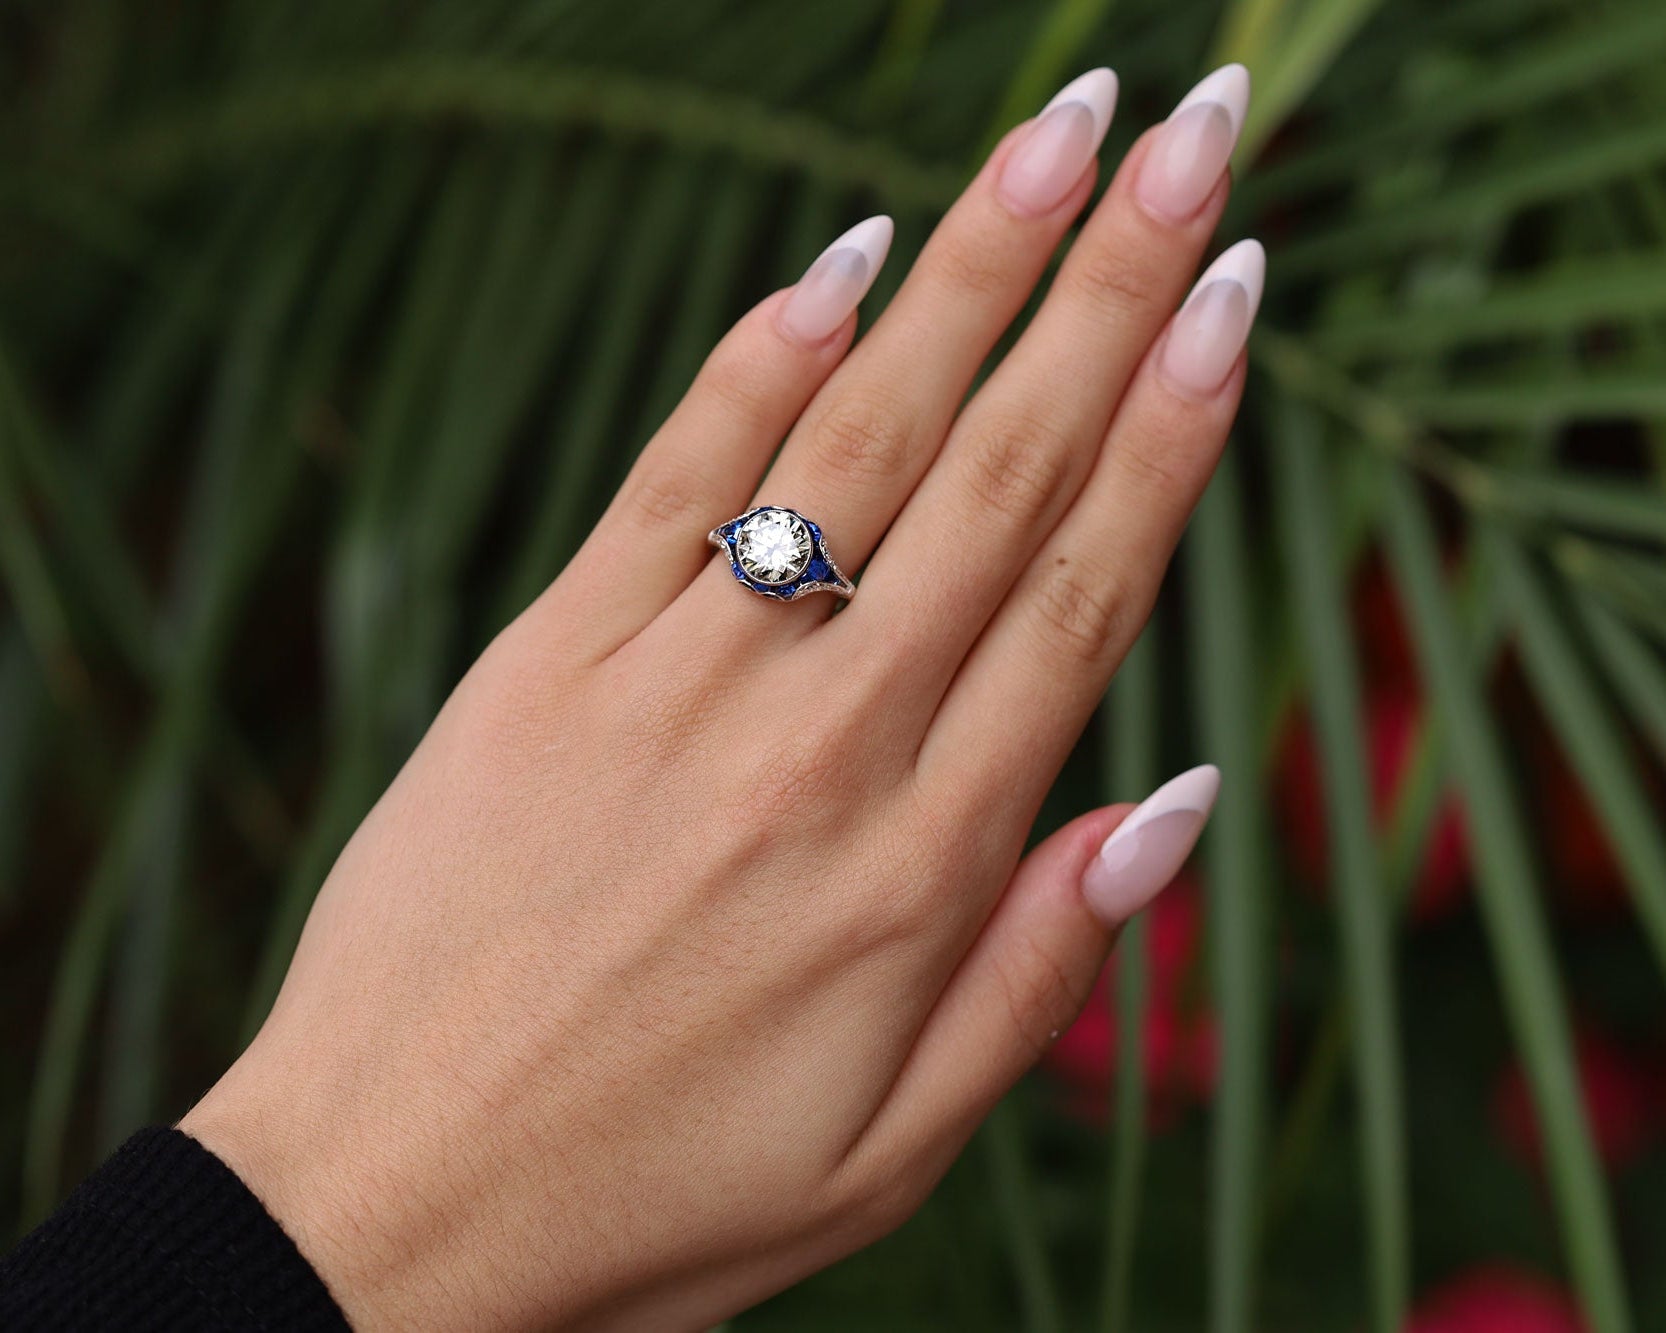 Art Deco Revival 2.34 Carat Diamond & Sapphire Engagement Ring